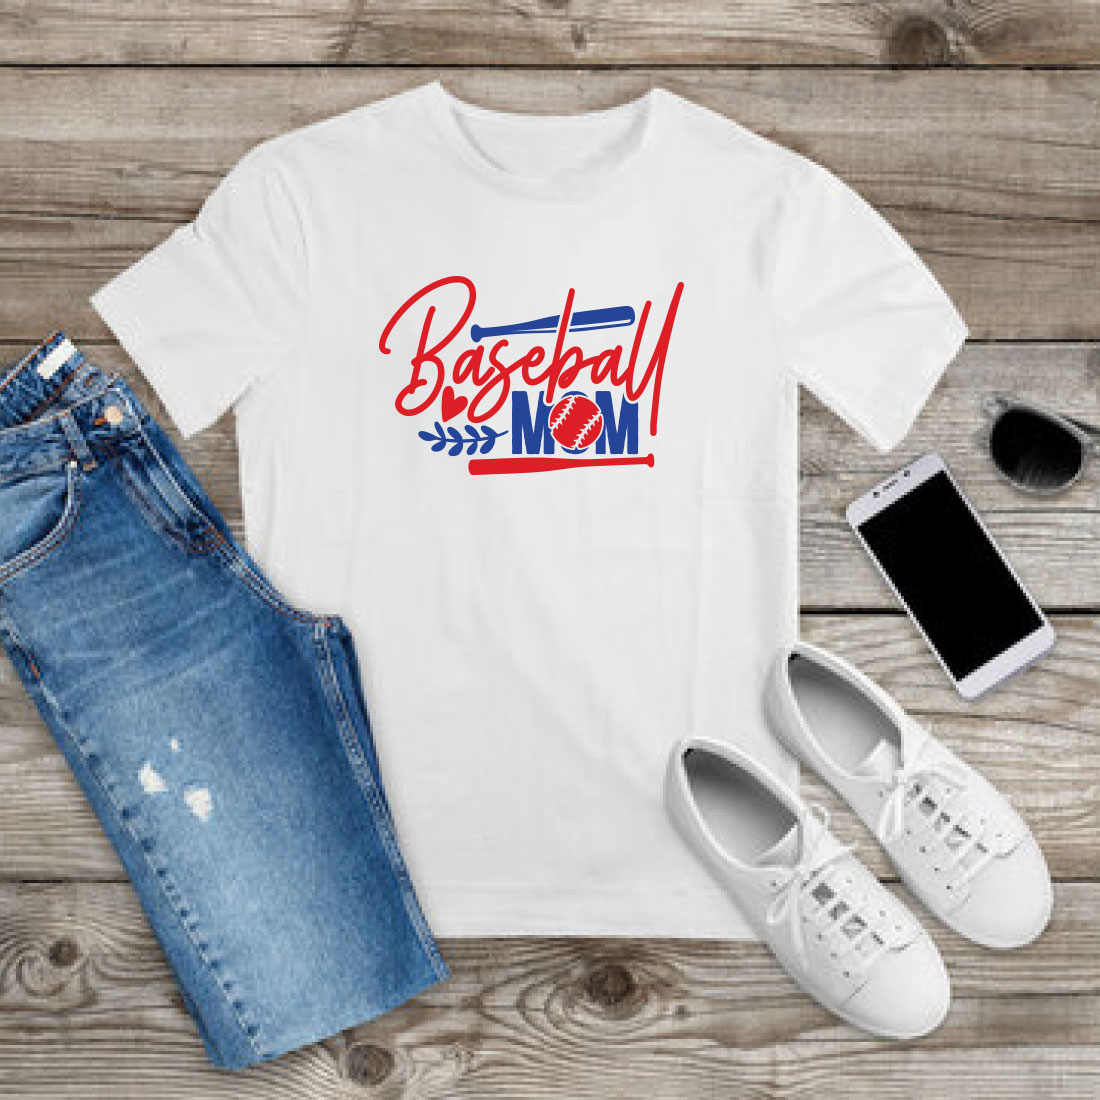 Baseball SVG T-shirt Design Bundle Vol-06